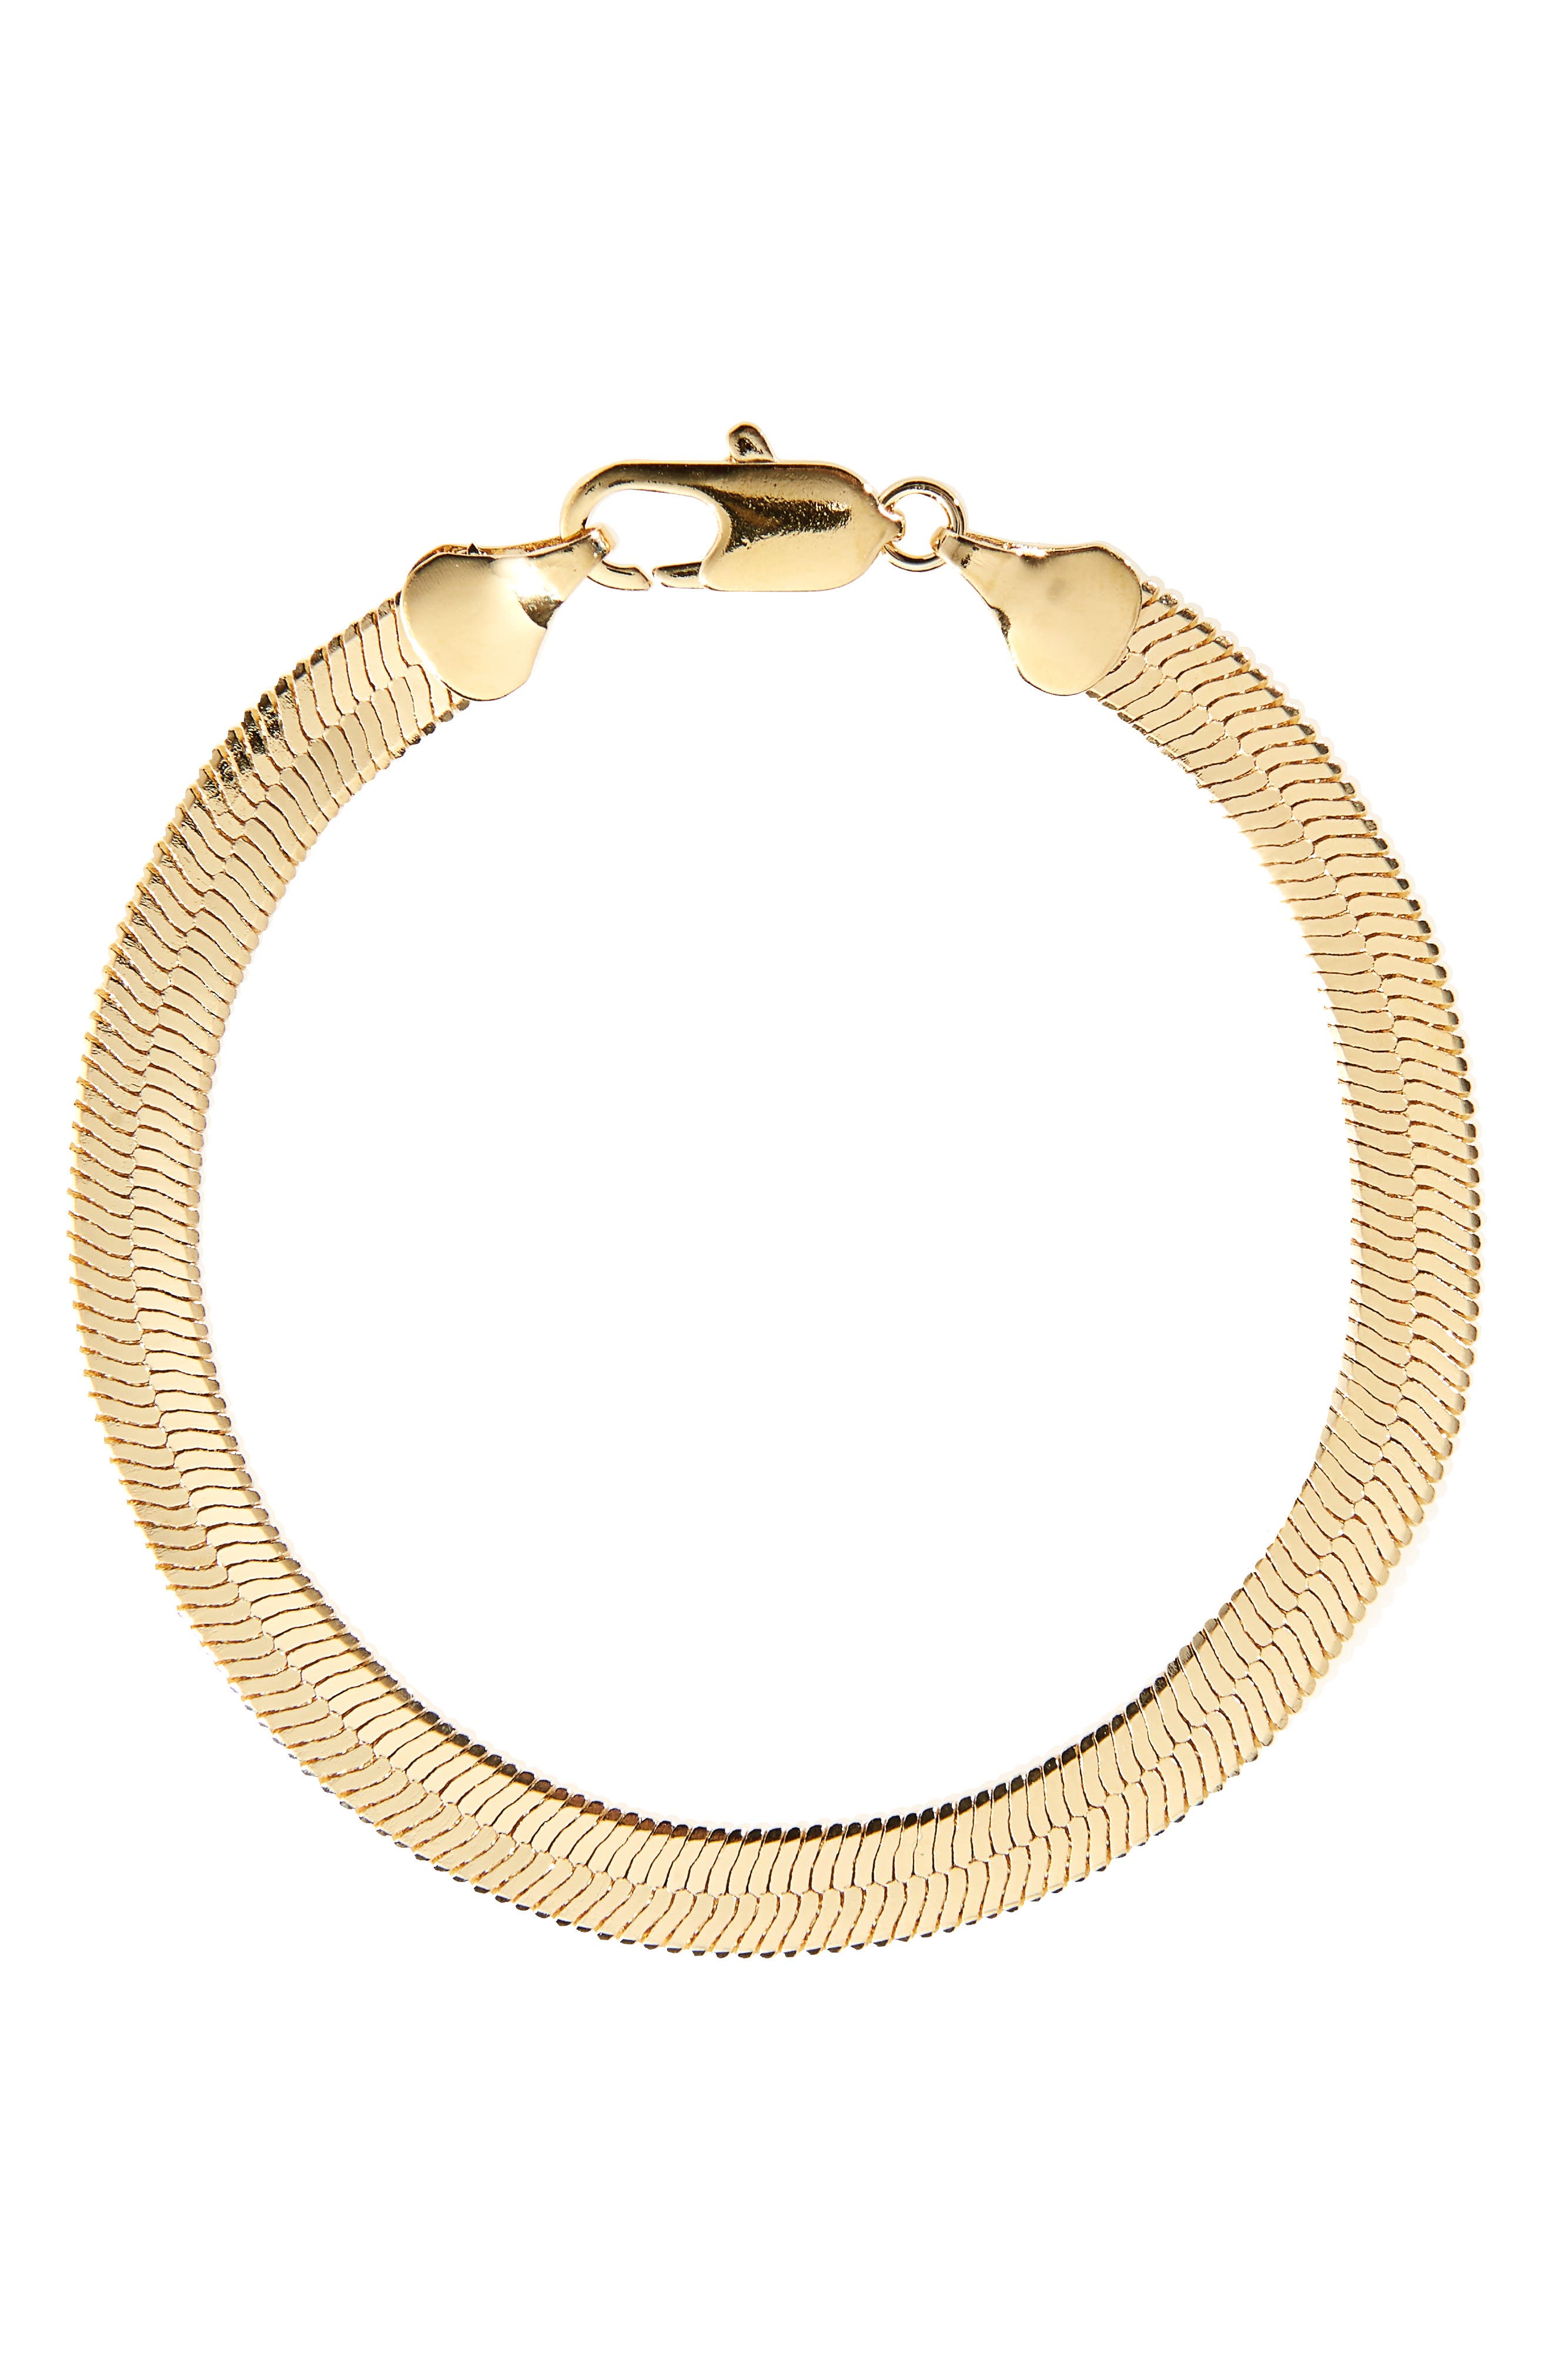 Laura Lombardi Omega Chain Bracelet in Brass at Nordstrom, Size 7 Us